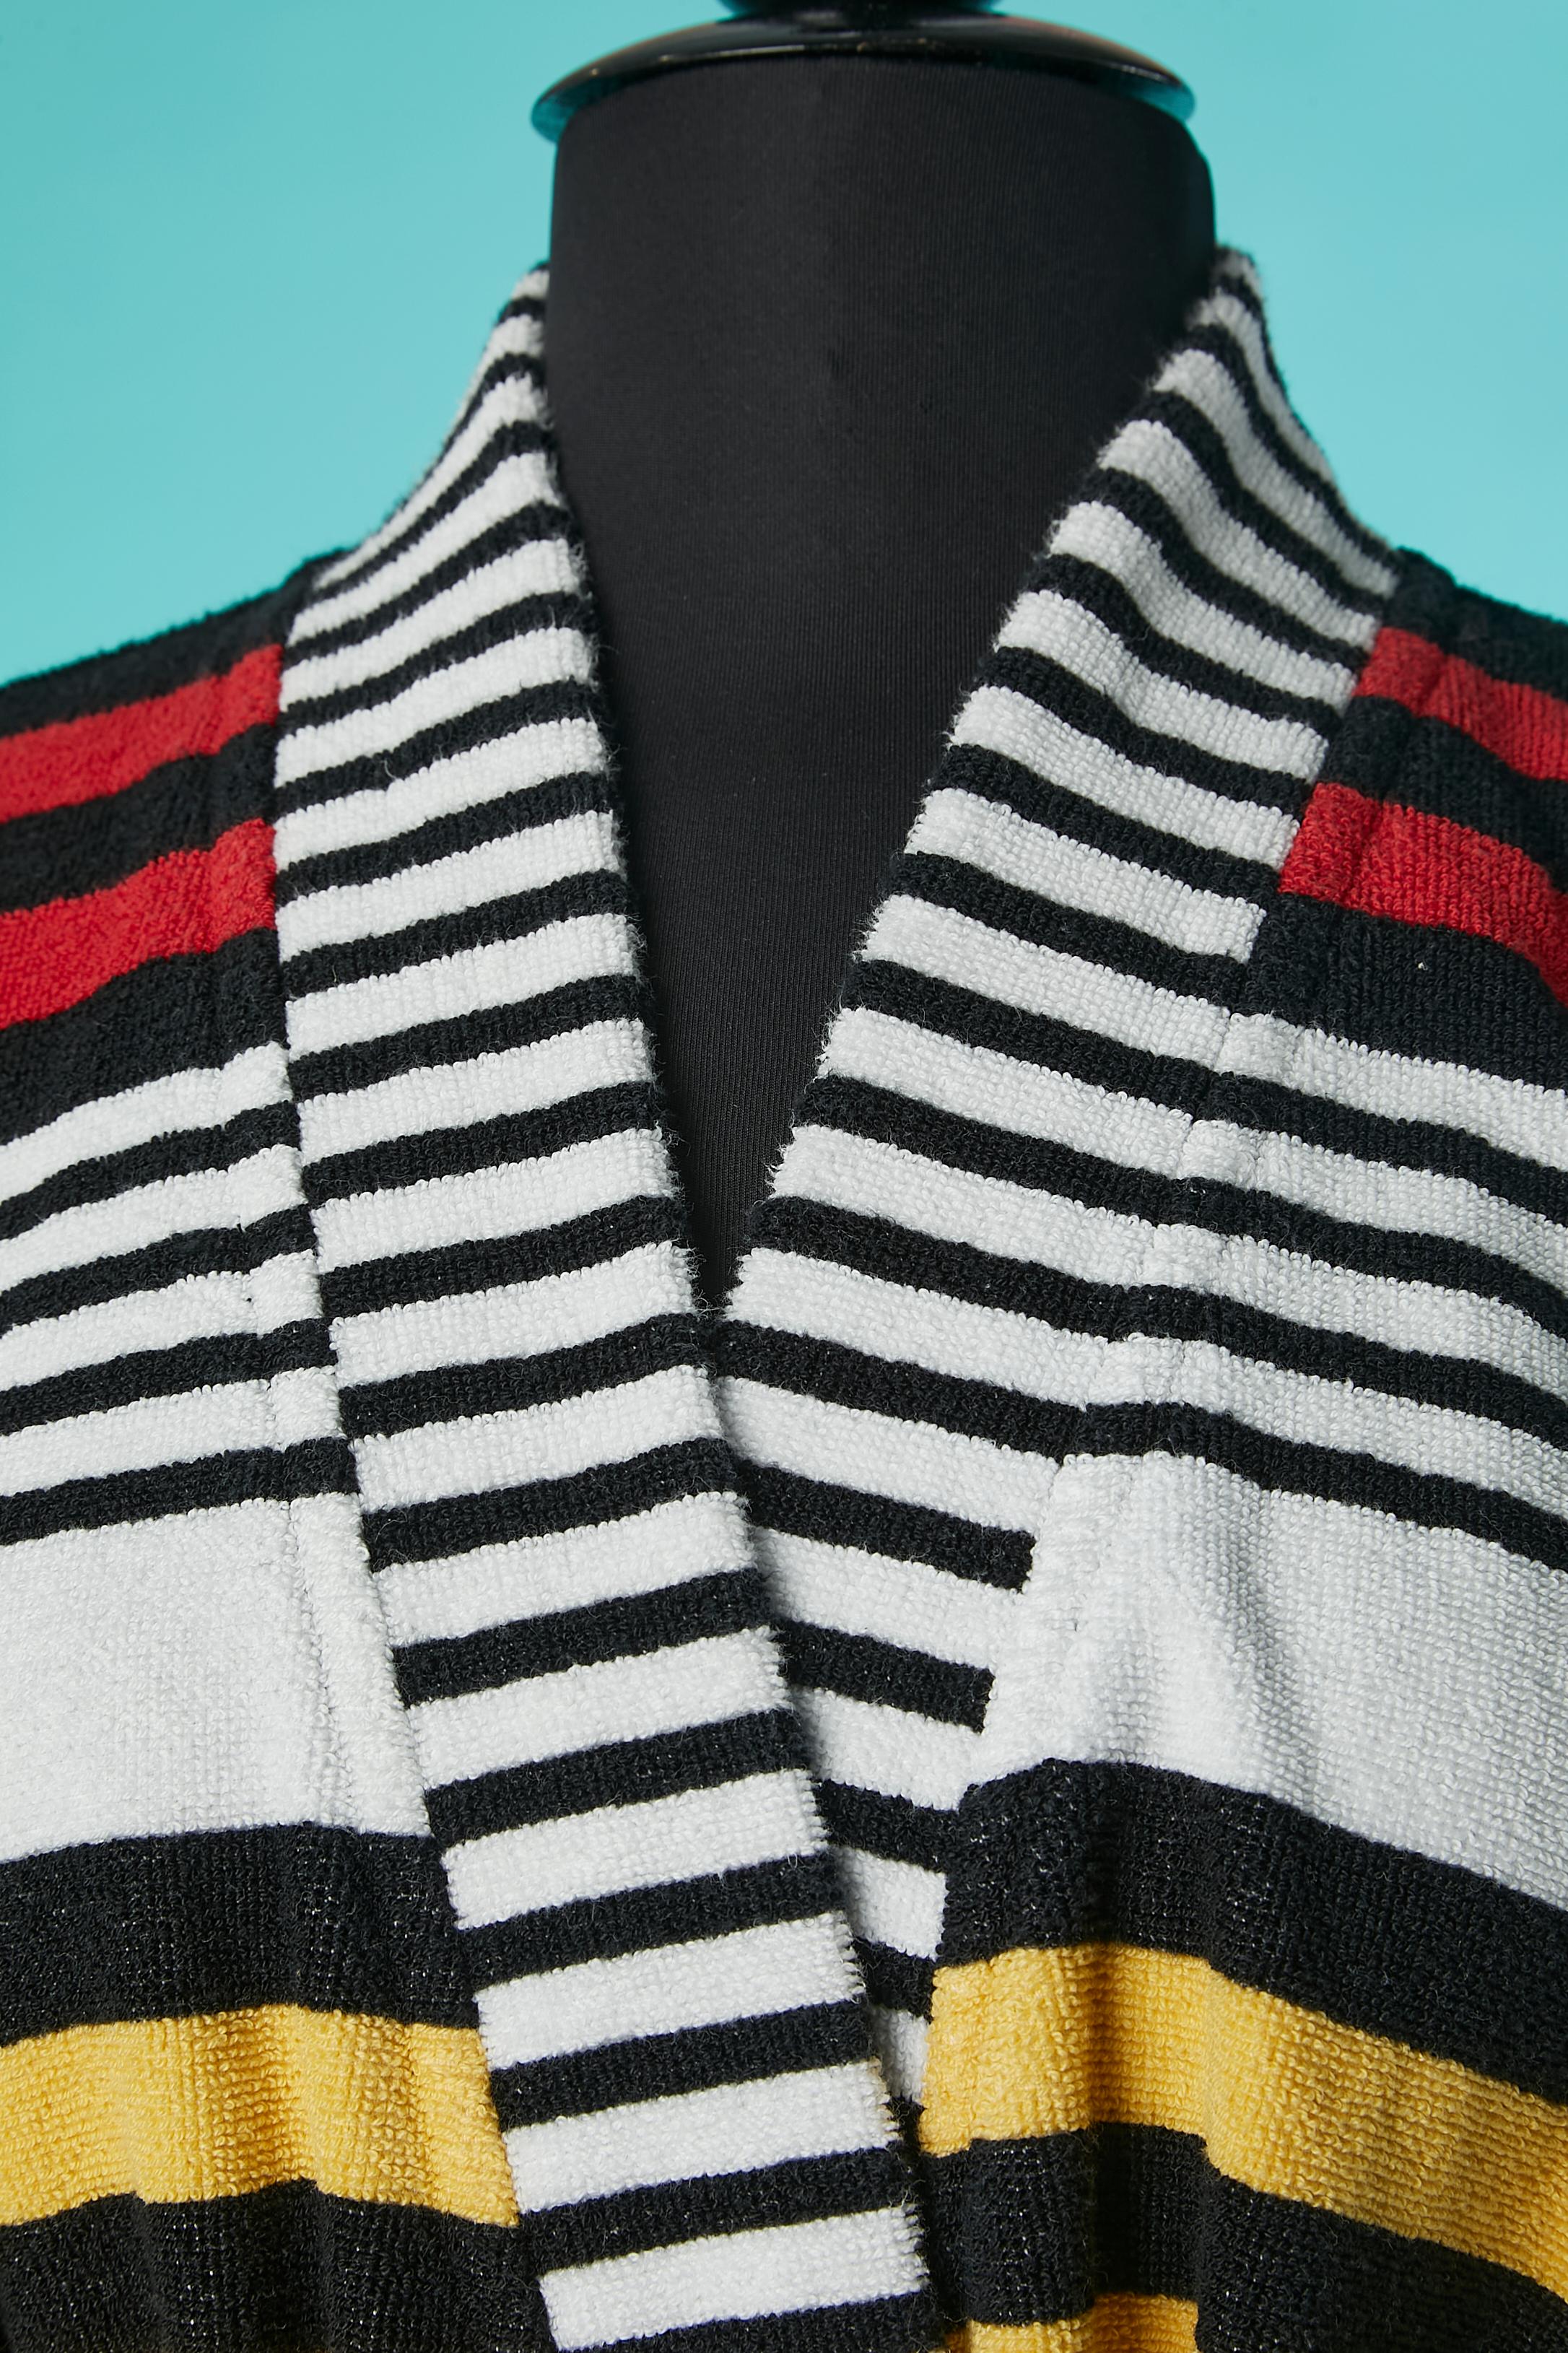 Bath Robe in cotton with stripes pattern. Belt and belt-loop. Pocket on both side.
SIZE L 